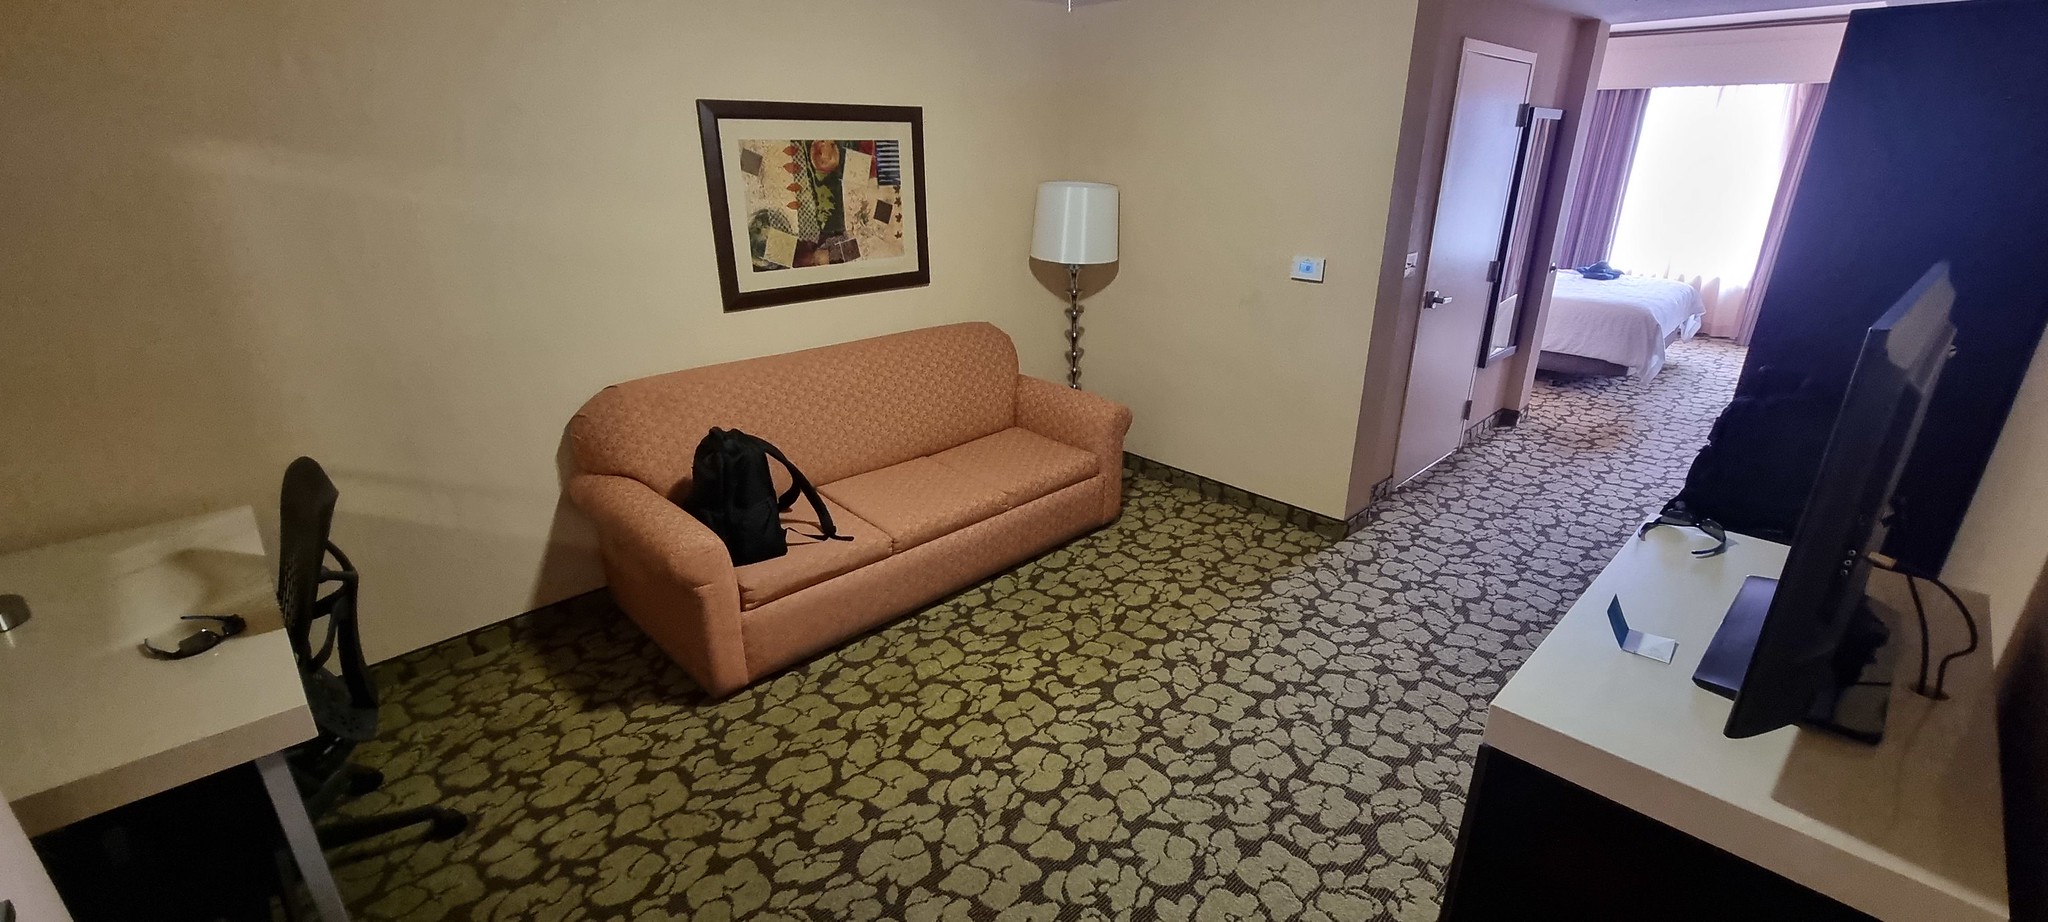 Our room at the Hilton Garden Inn, Las Vegas South